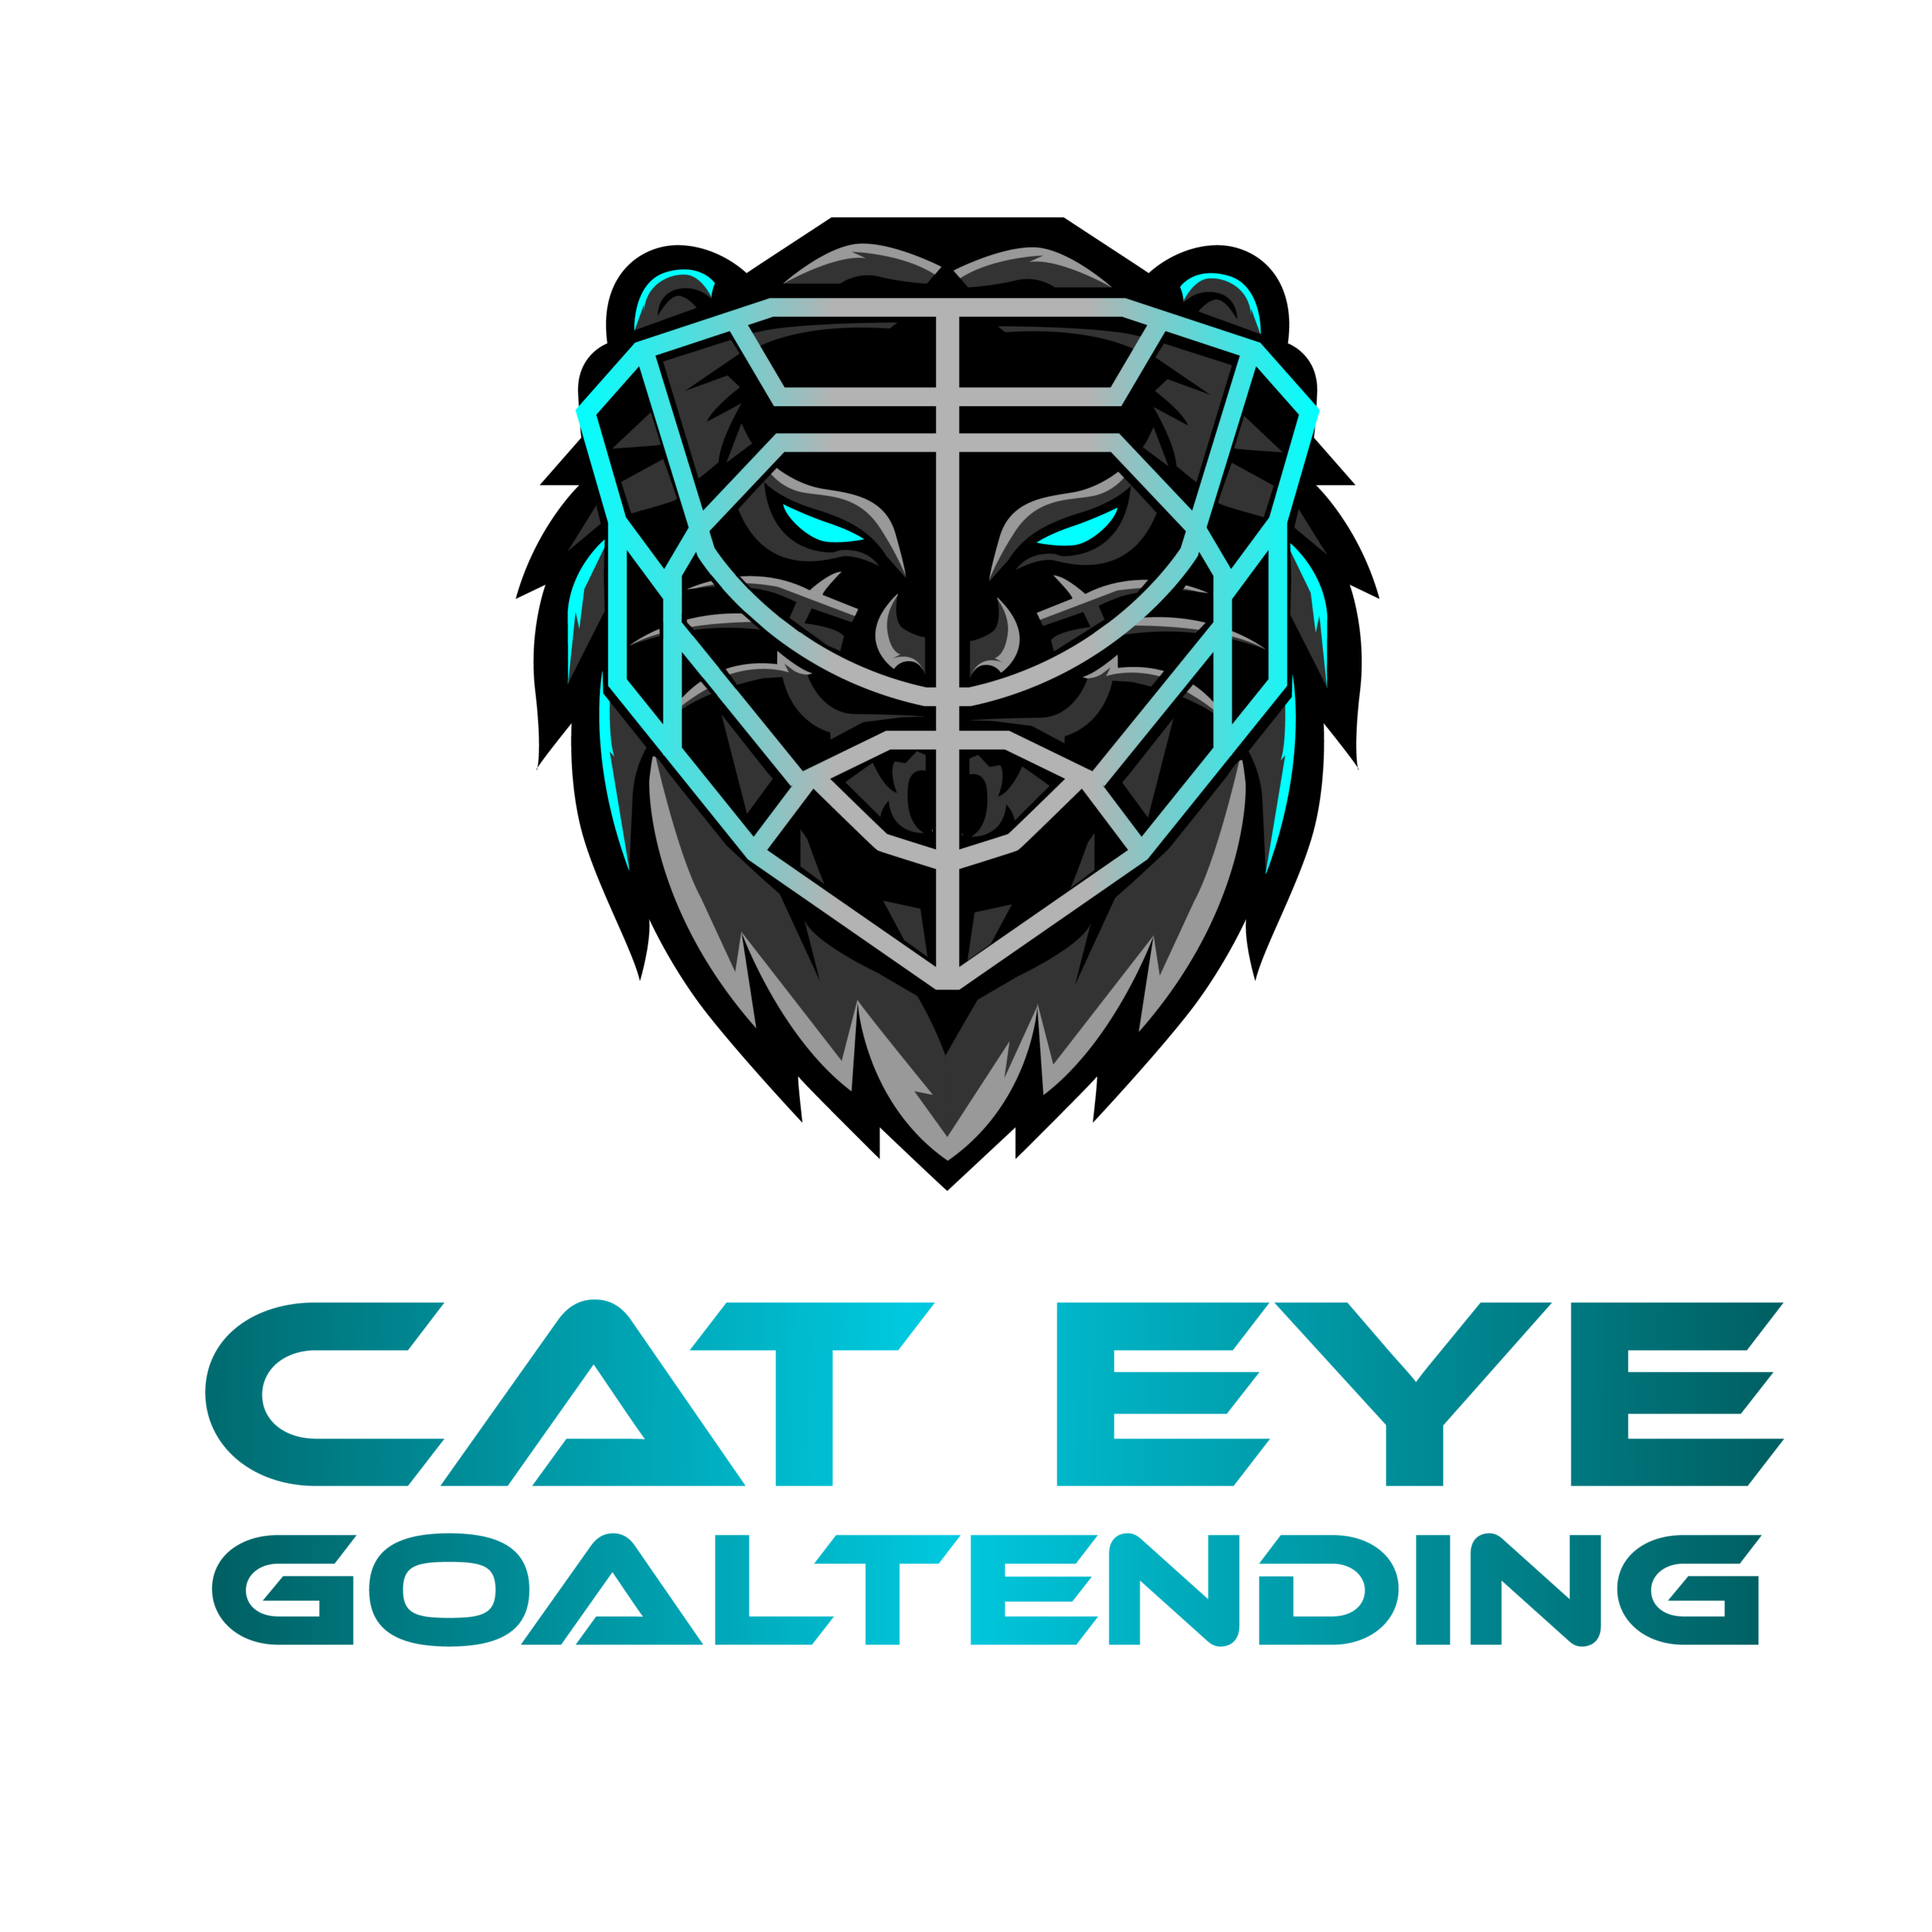 Cateye Goaltending